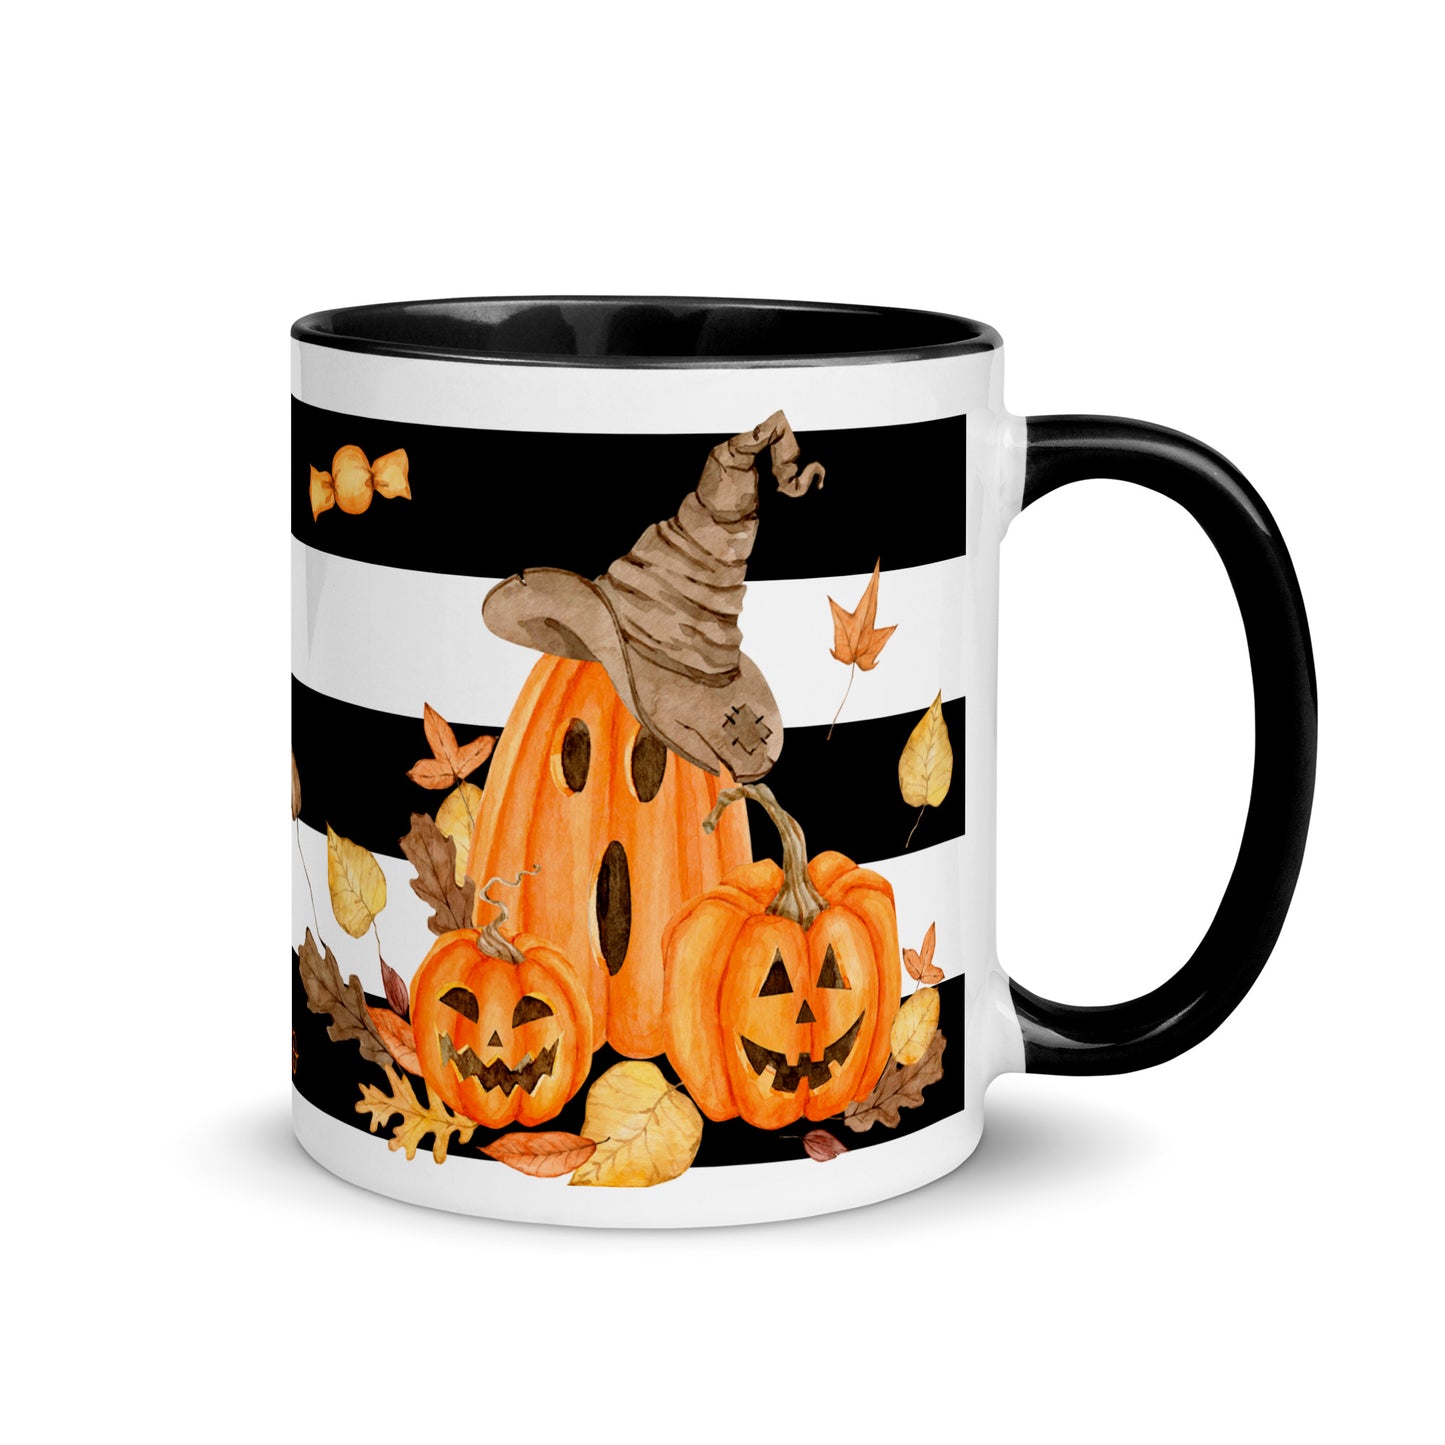 Trick or Treat Halloween Mug